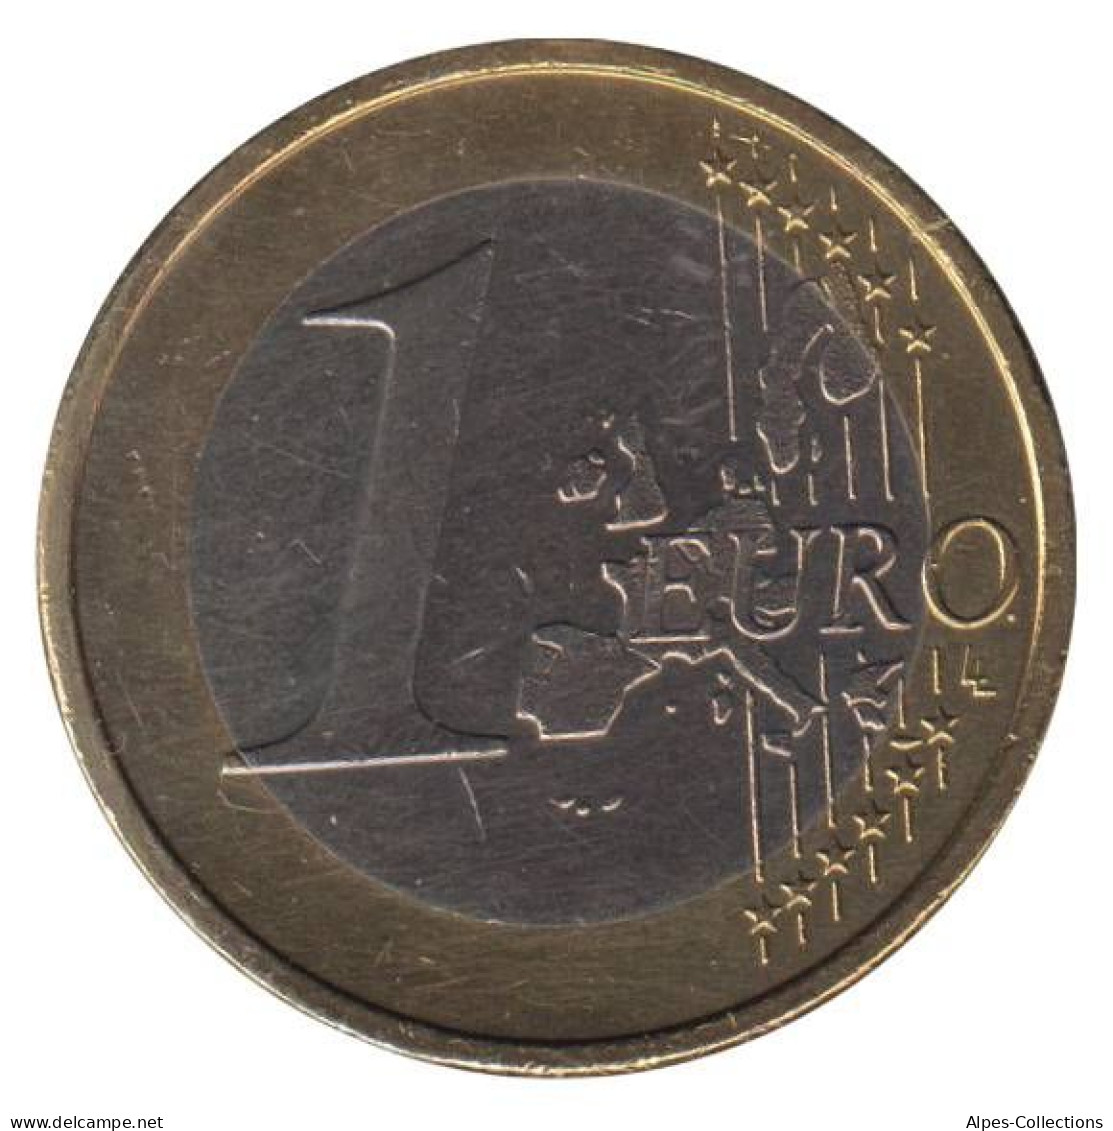 AL10002.1A - ALLEMAGNE - 1 Euro - 2002 A - Germania